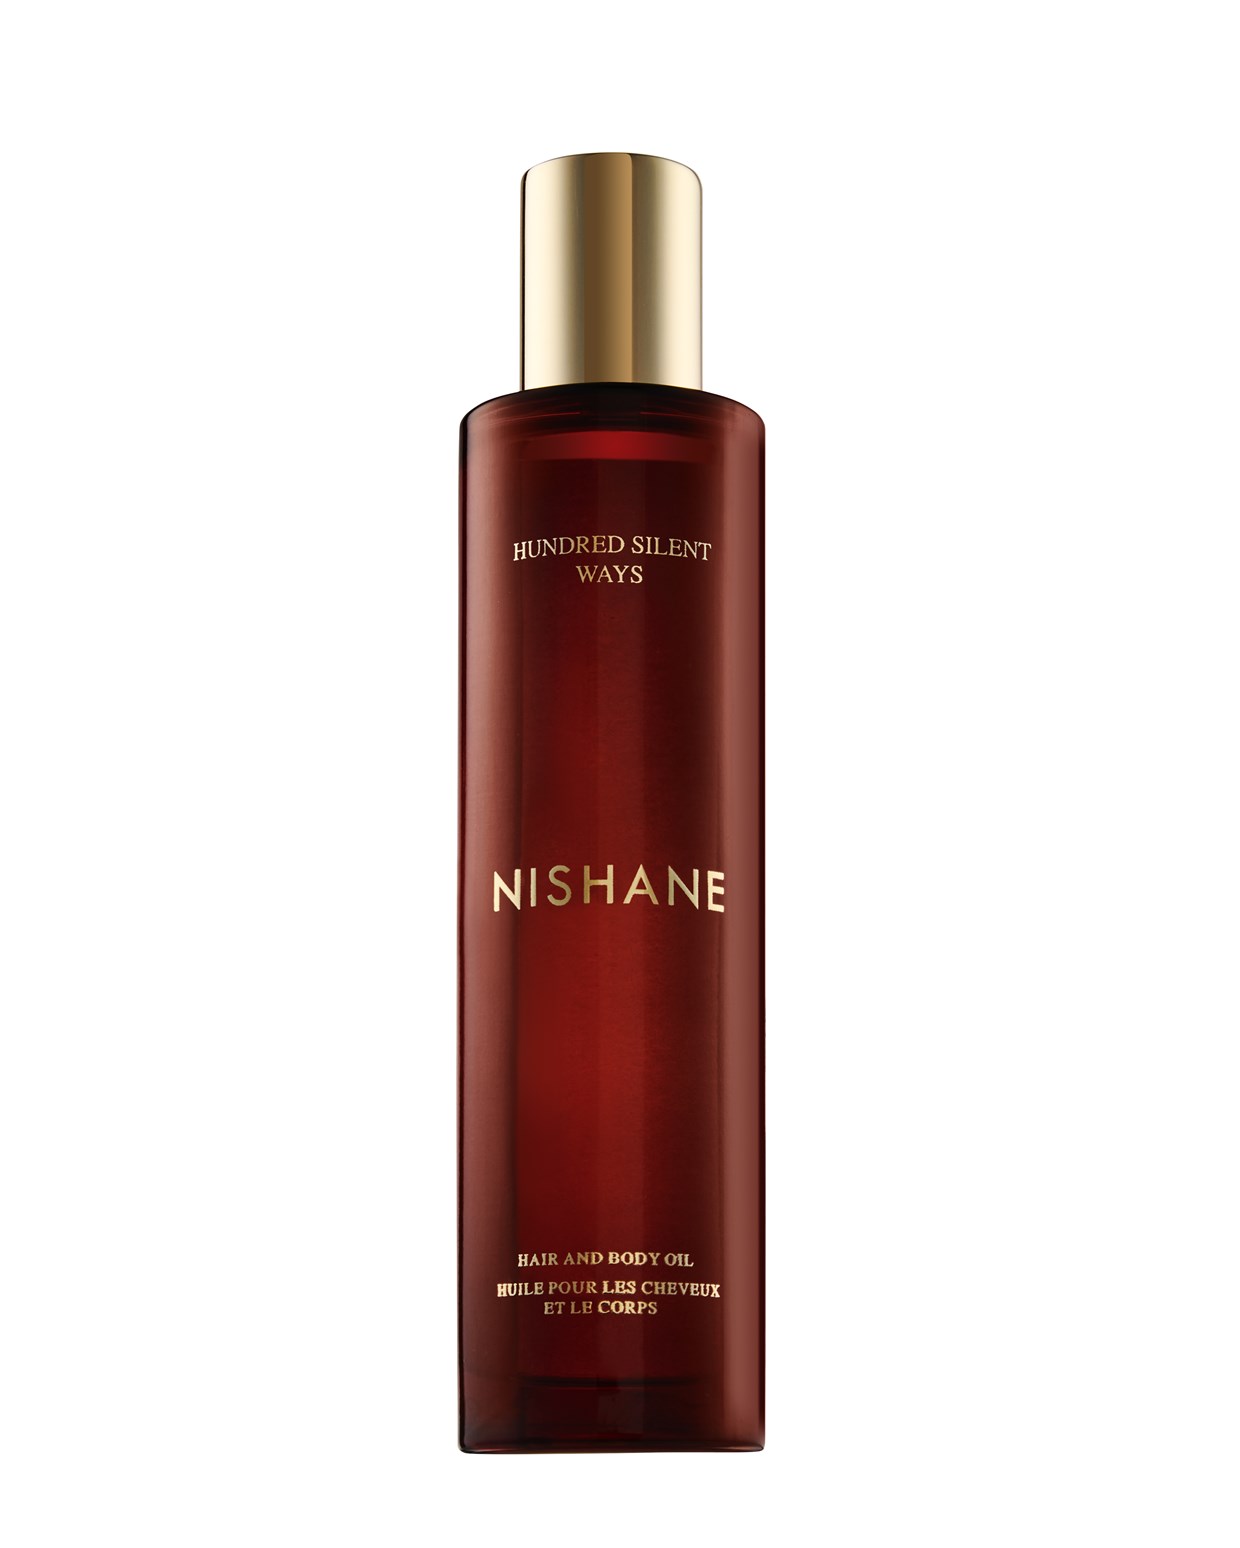 Nishane - Hundred Silent Ways - Hair & Body Oil 